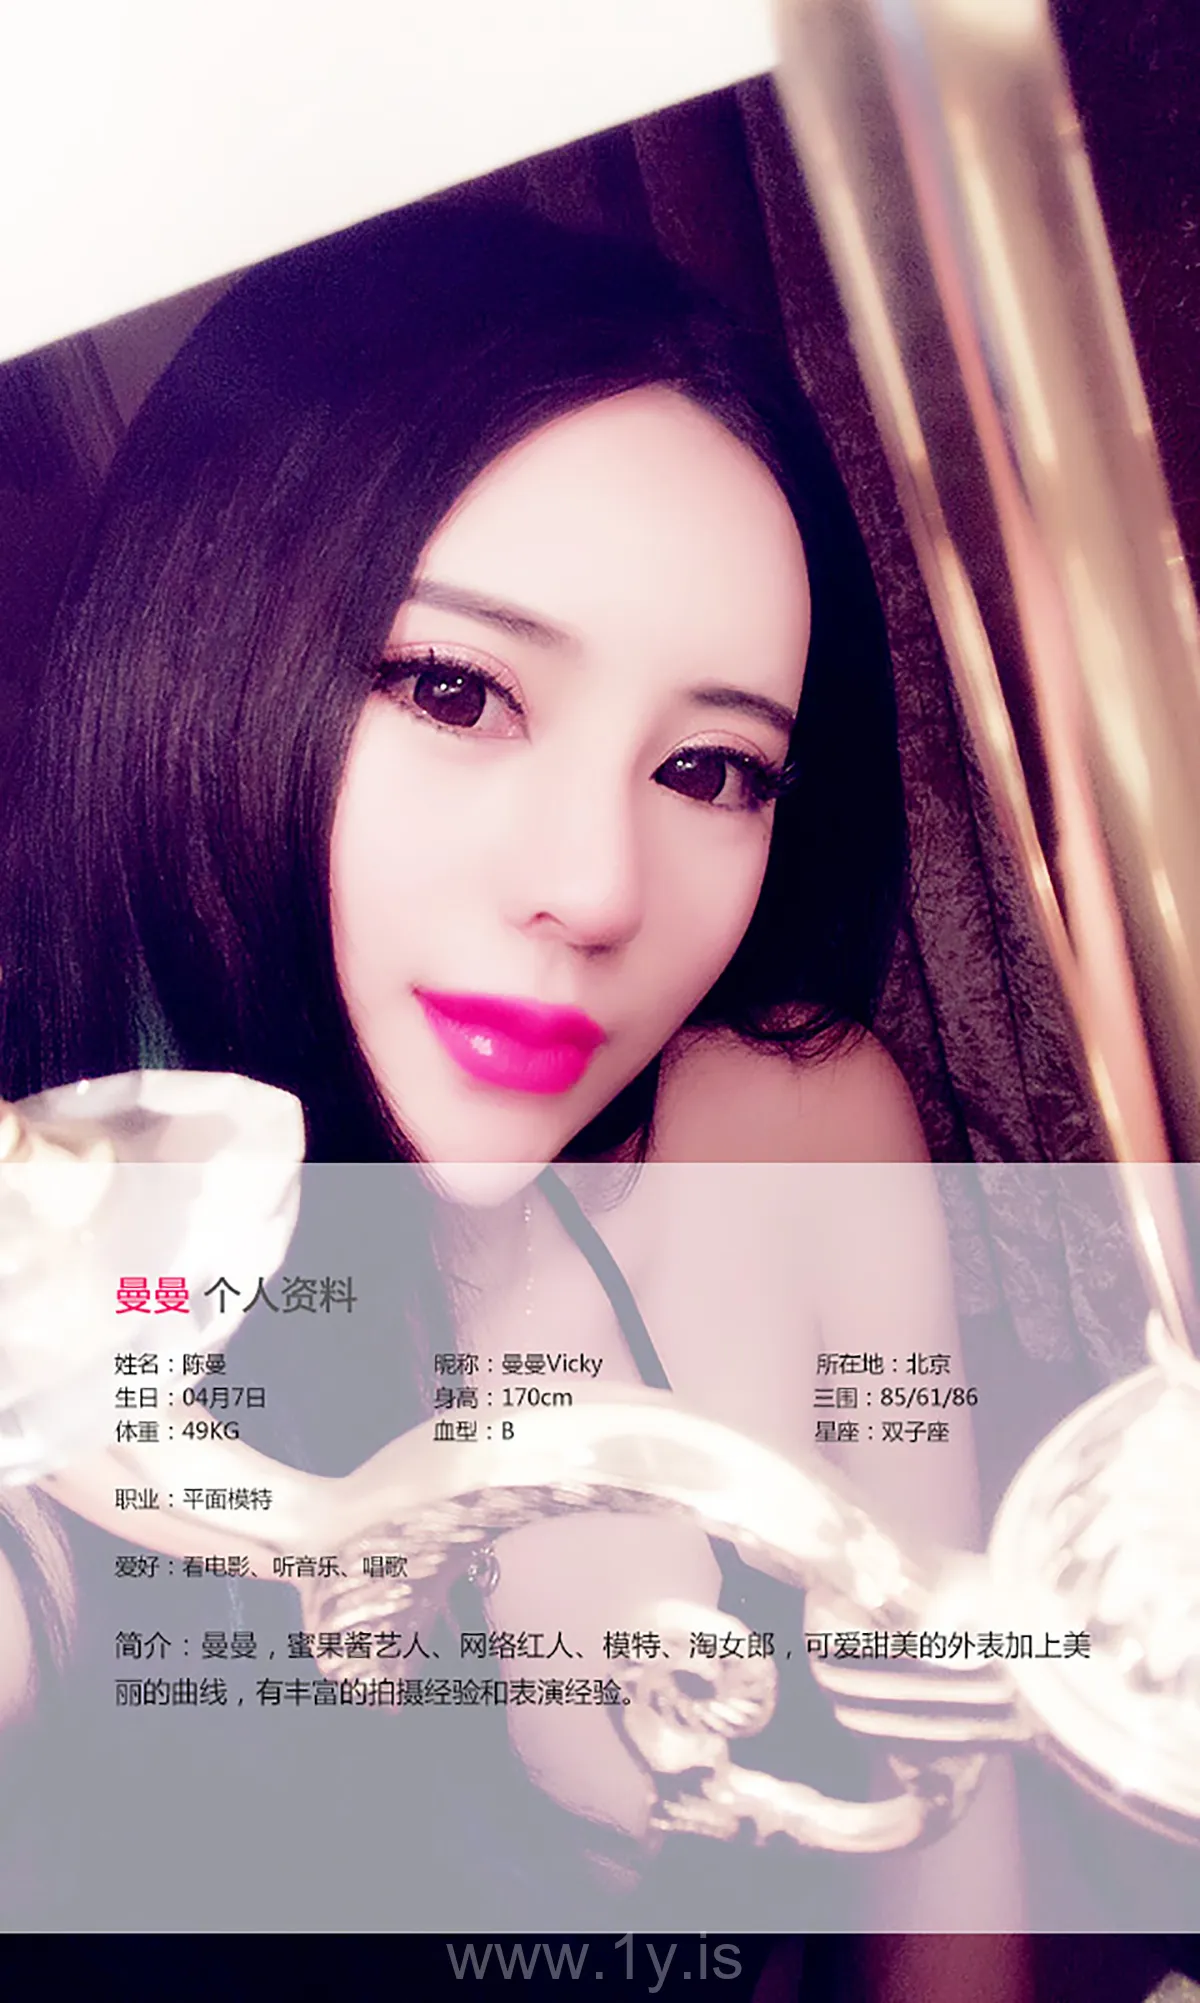 UGIRLS NO.382 Sexy & Good-looking Chinese Girl 陈雅曼